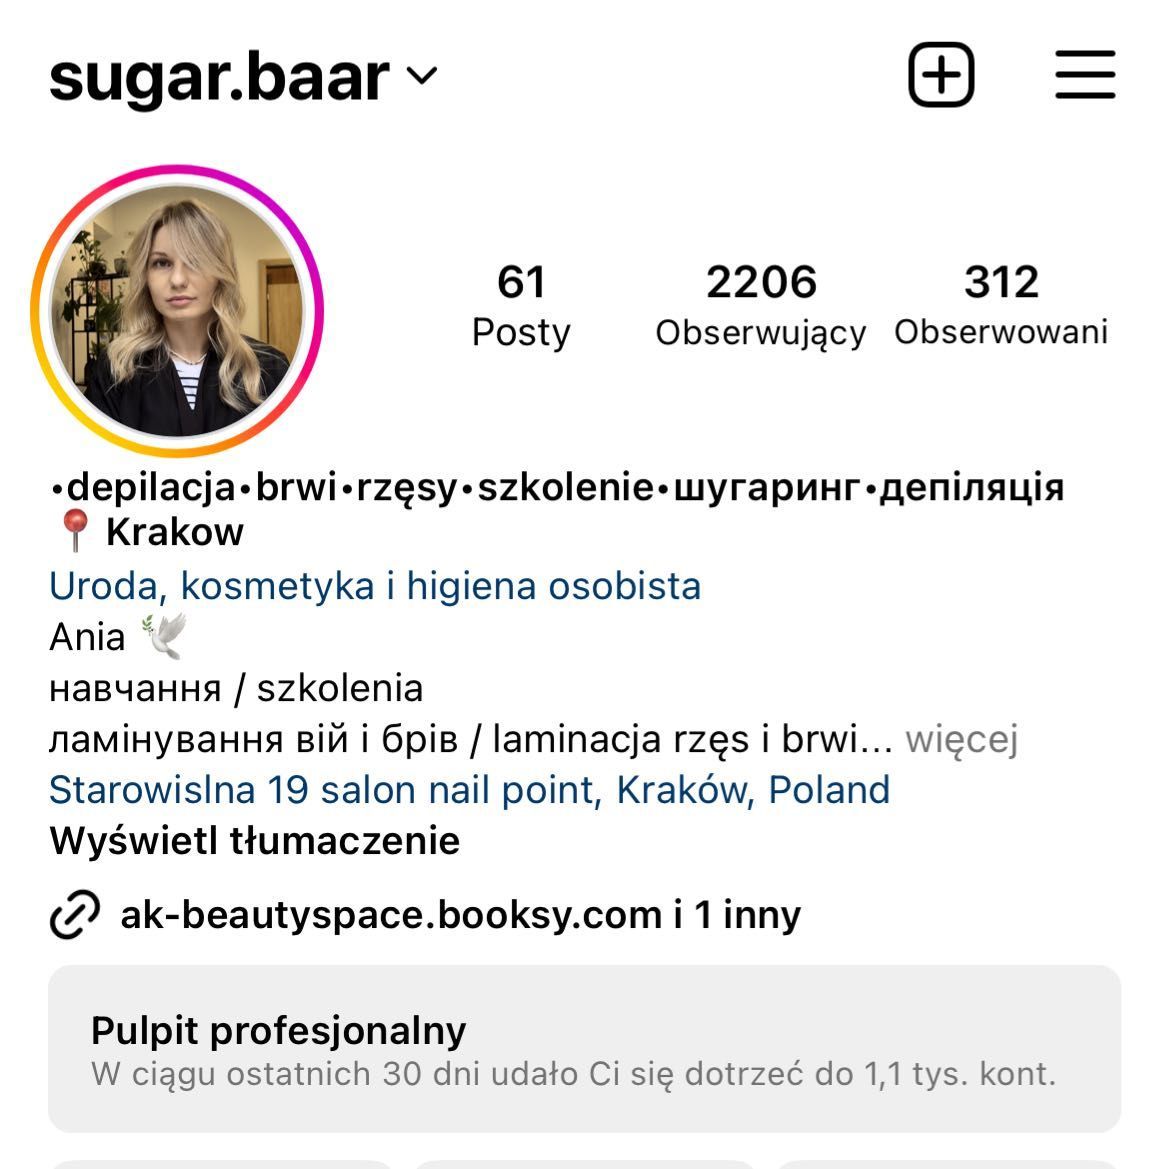 Portfolio usługi Zaobserwuj mój instagram sugar.baar